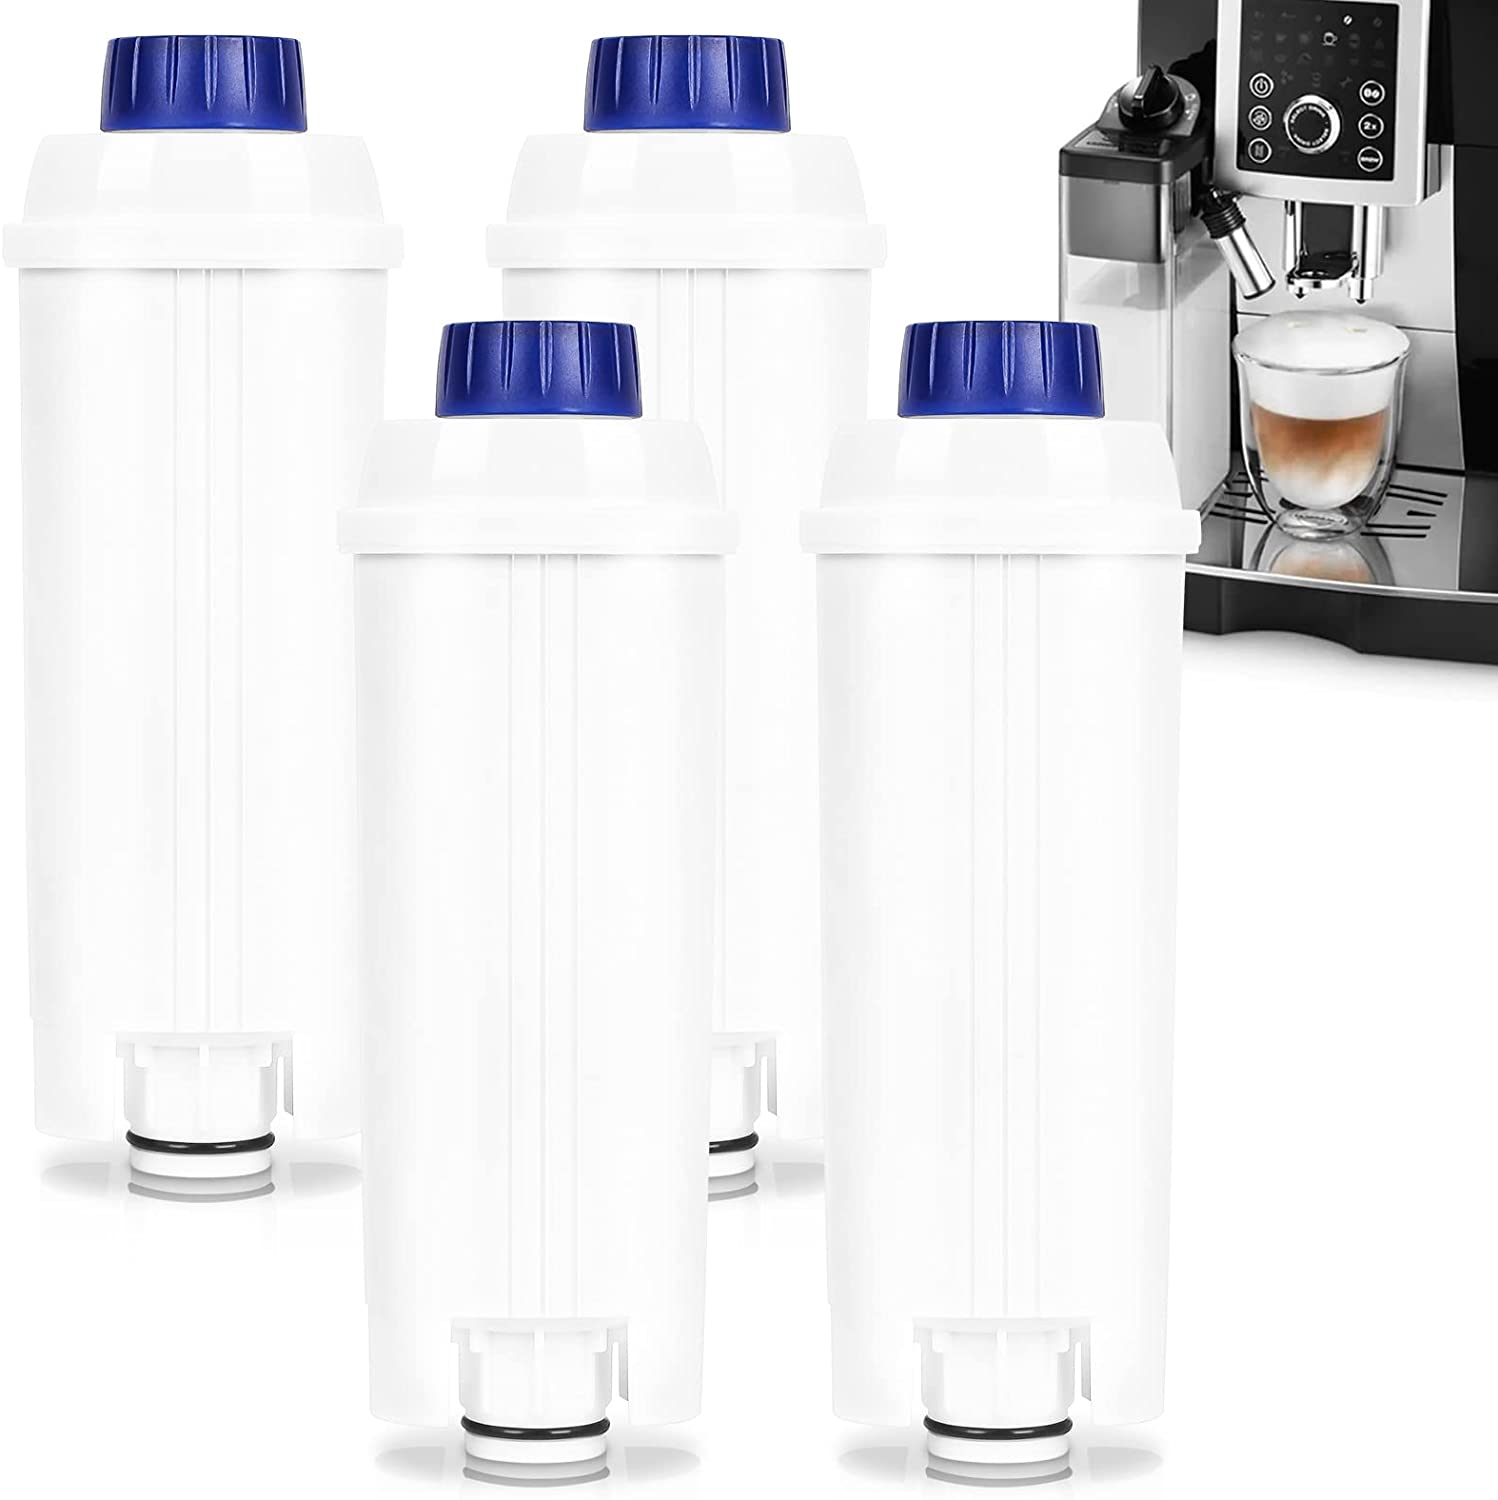 Randaco Pack of 4 Water Filters for DeLonghi Coffee Machines, Compatible with Delonghi Water Filter DLS C002, ECAM, ESAM, ETAM, DeLonghi Filter Cartridge Coffee Machine Water Filter